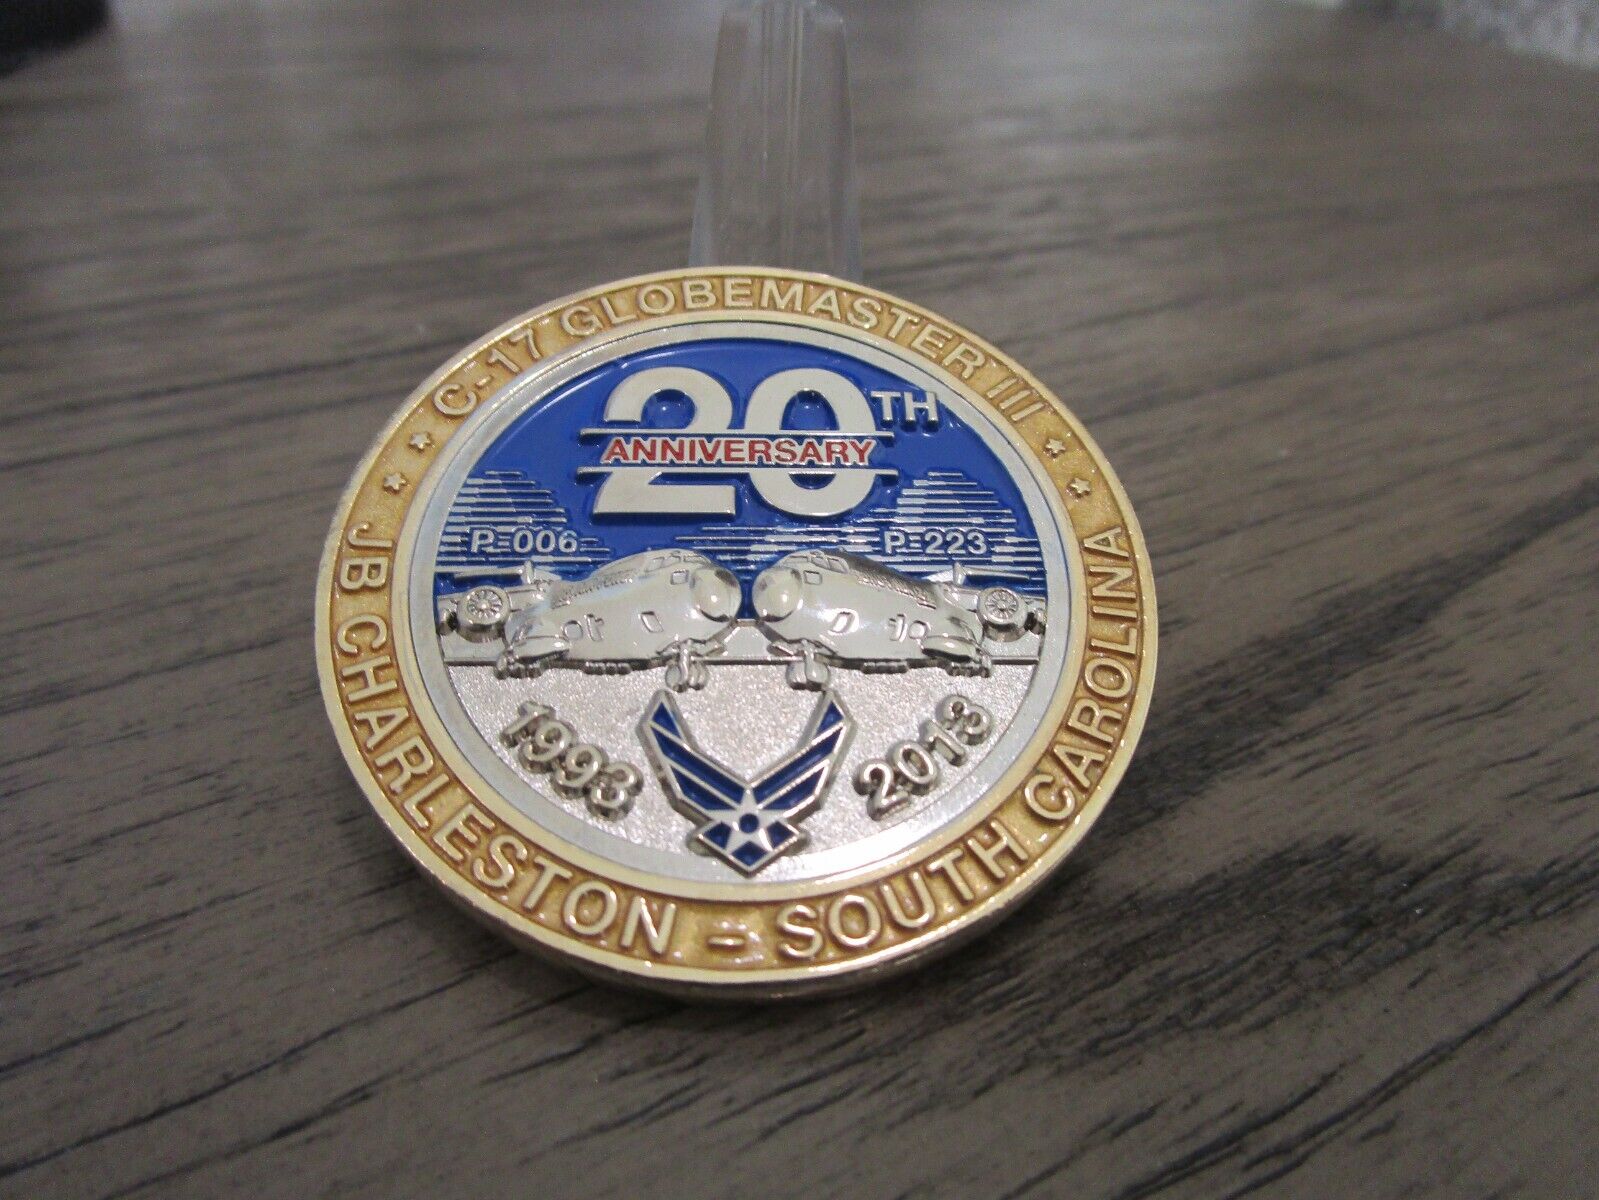 USAF & Boeing C -17 Globemaster III 20th Anniversary Challenge Coin #727Q